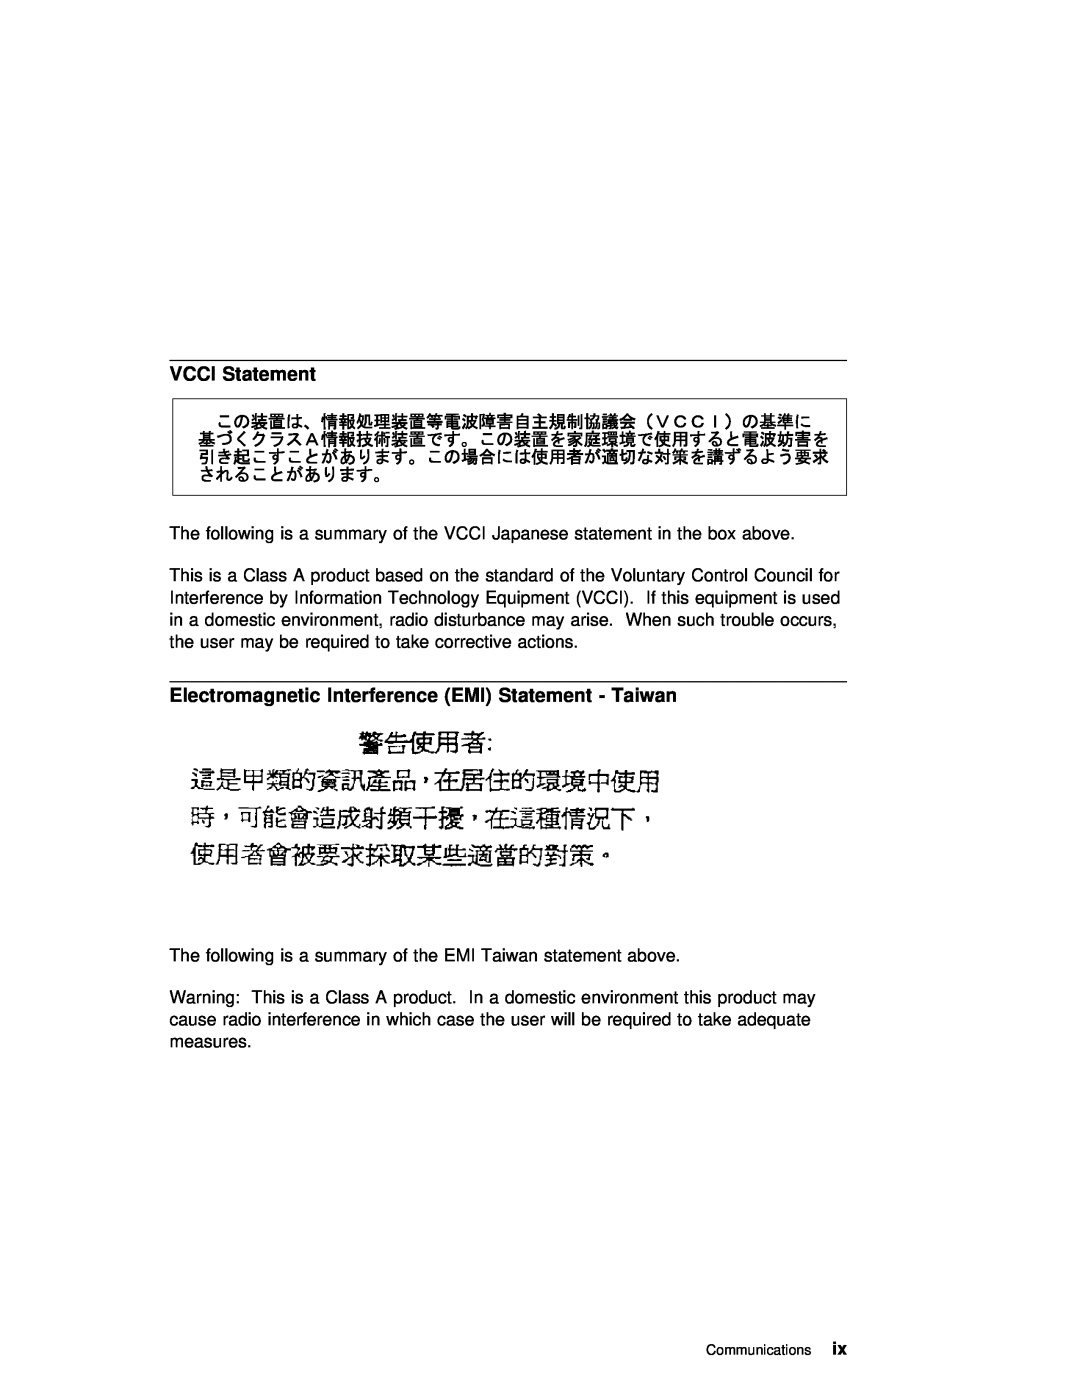 IBM B50 manual VCCI Statement, Electromagnetic Interference EMI Statement - Taiwan 